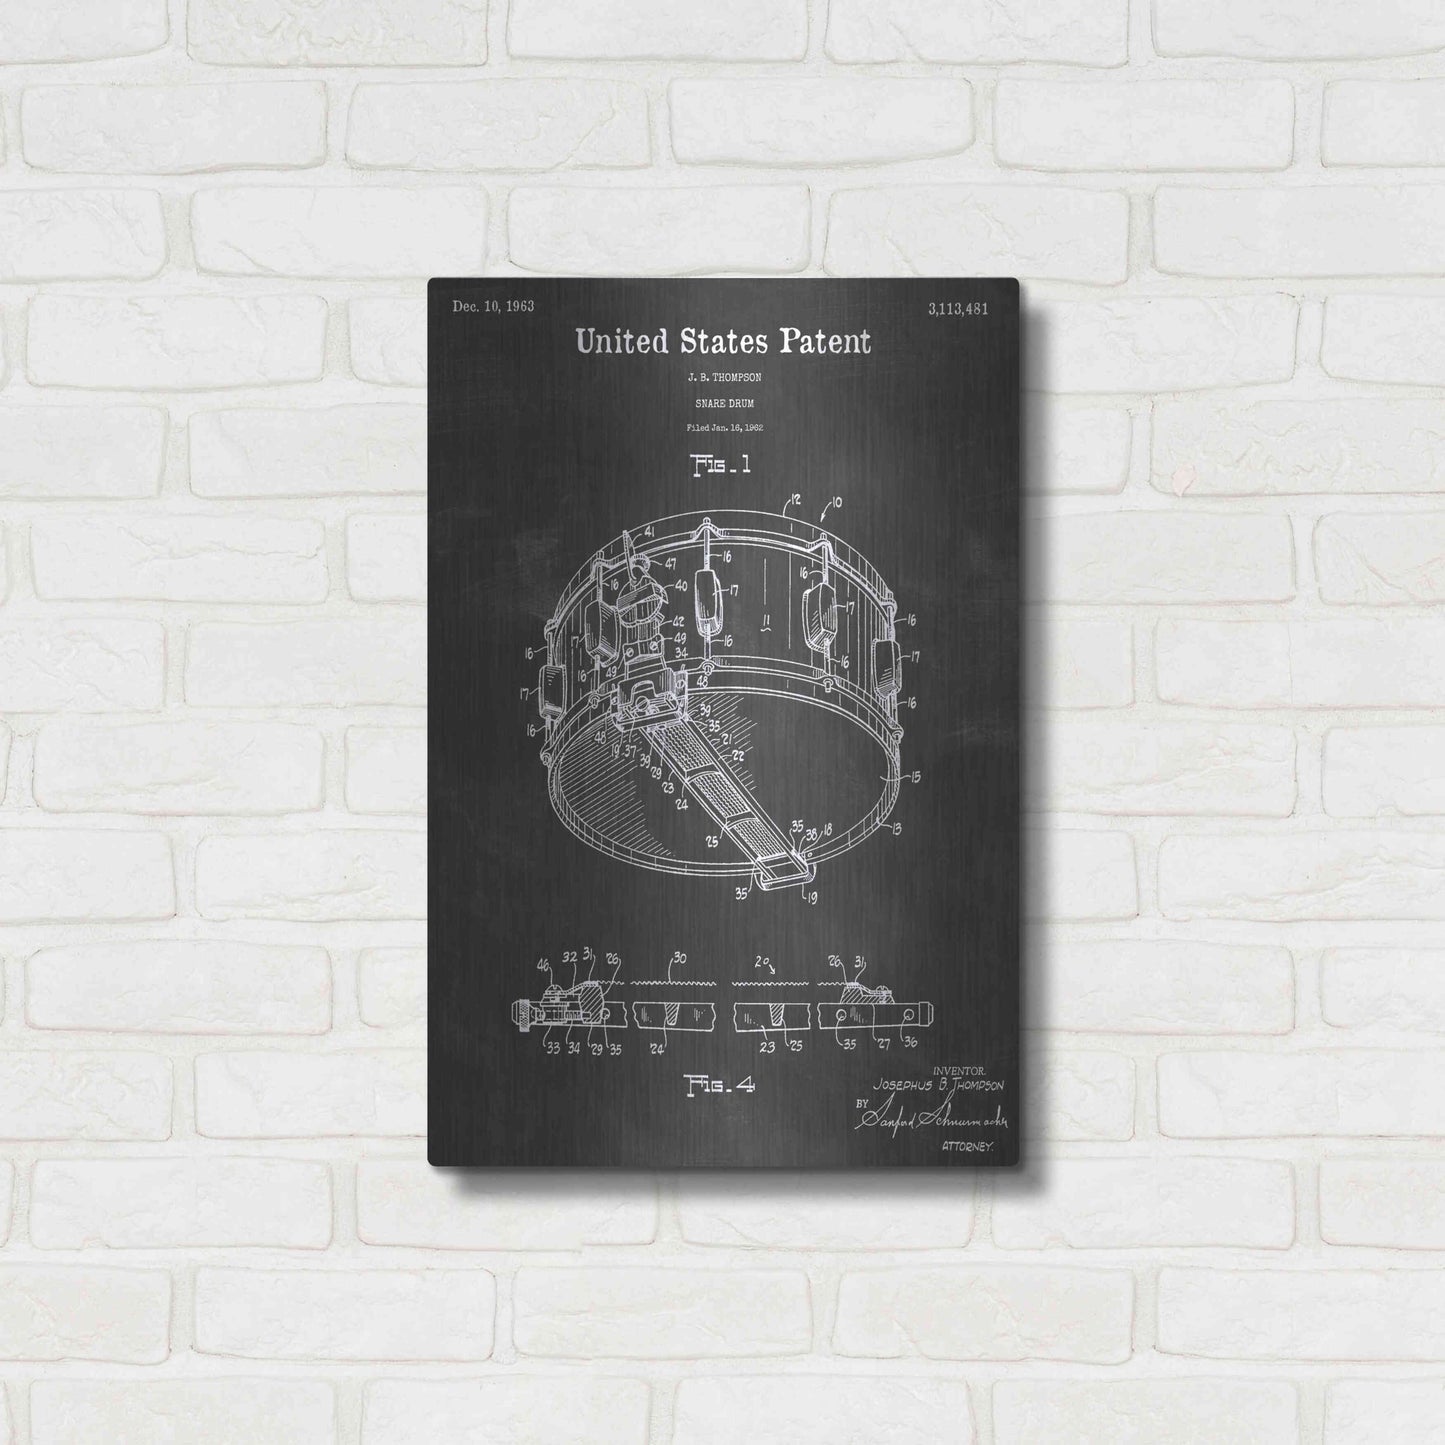 Luxe Metal Art 'Snare Drum Vintage Patent Blueprint' by Epic Portfolio, Metal Wall Art,16x24